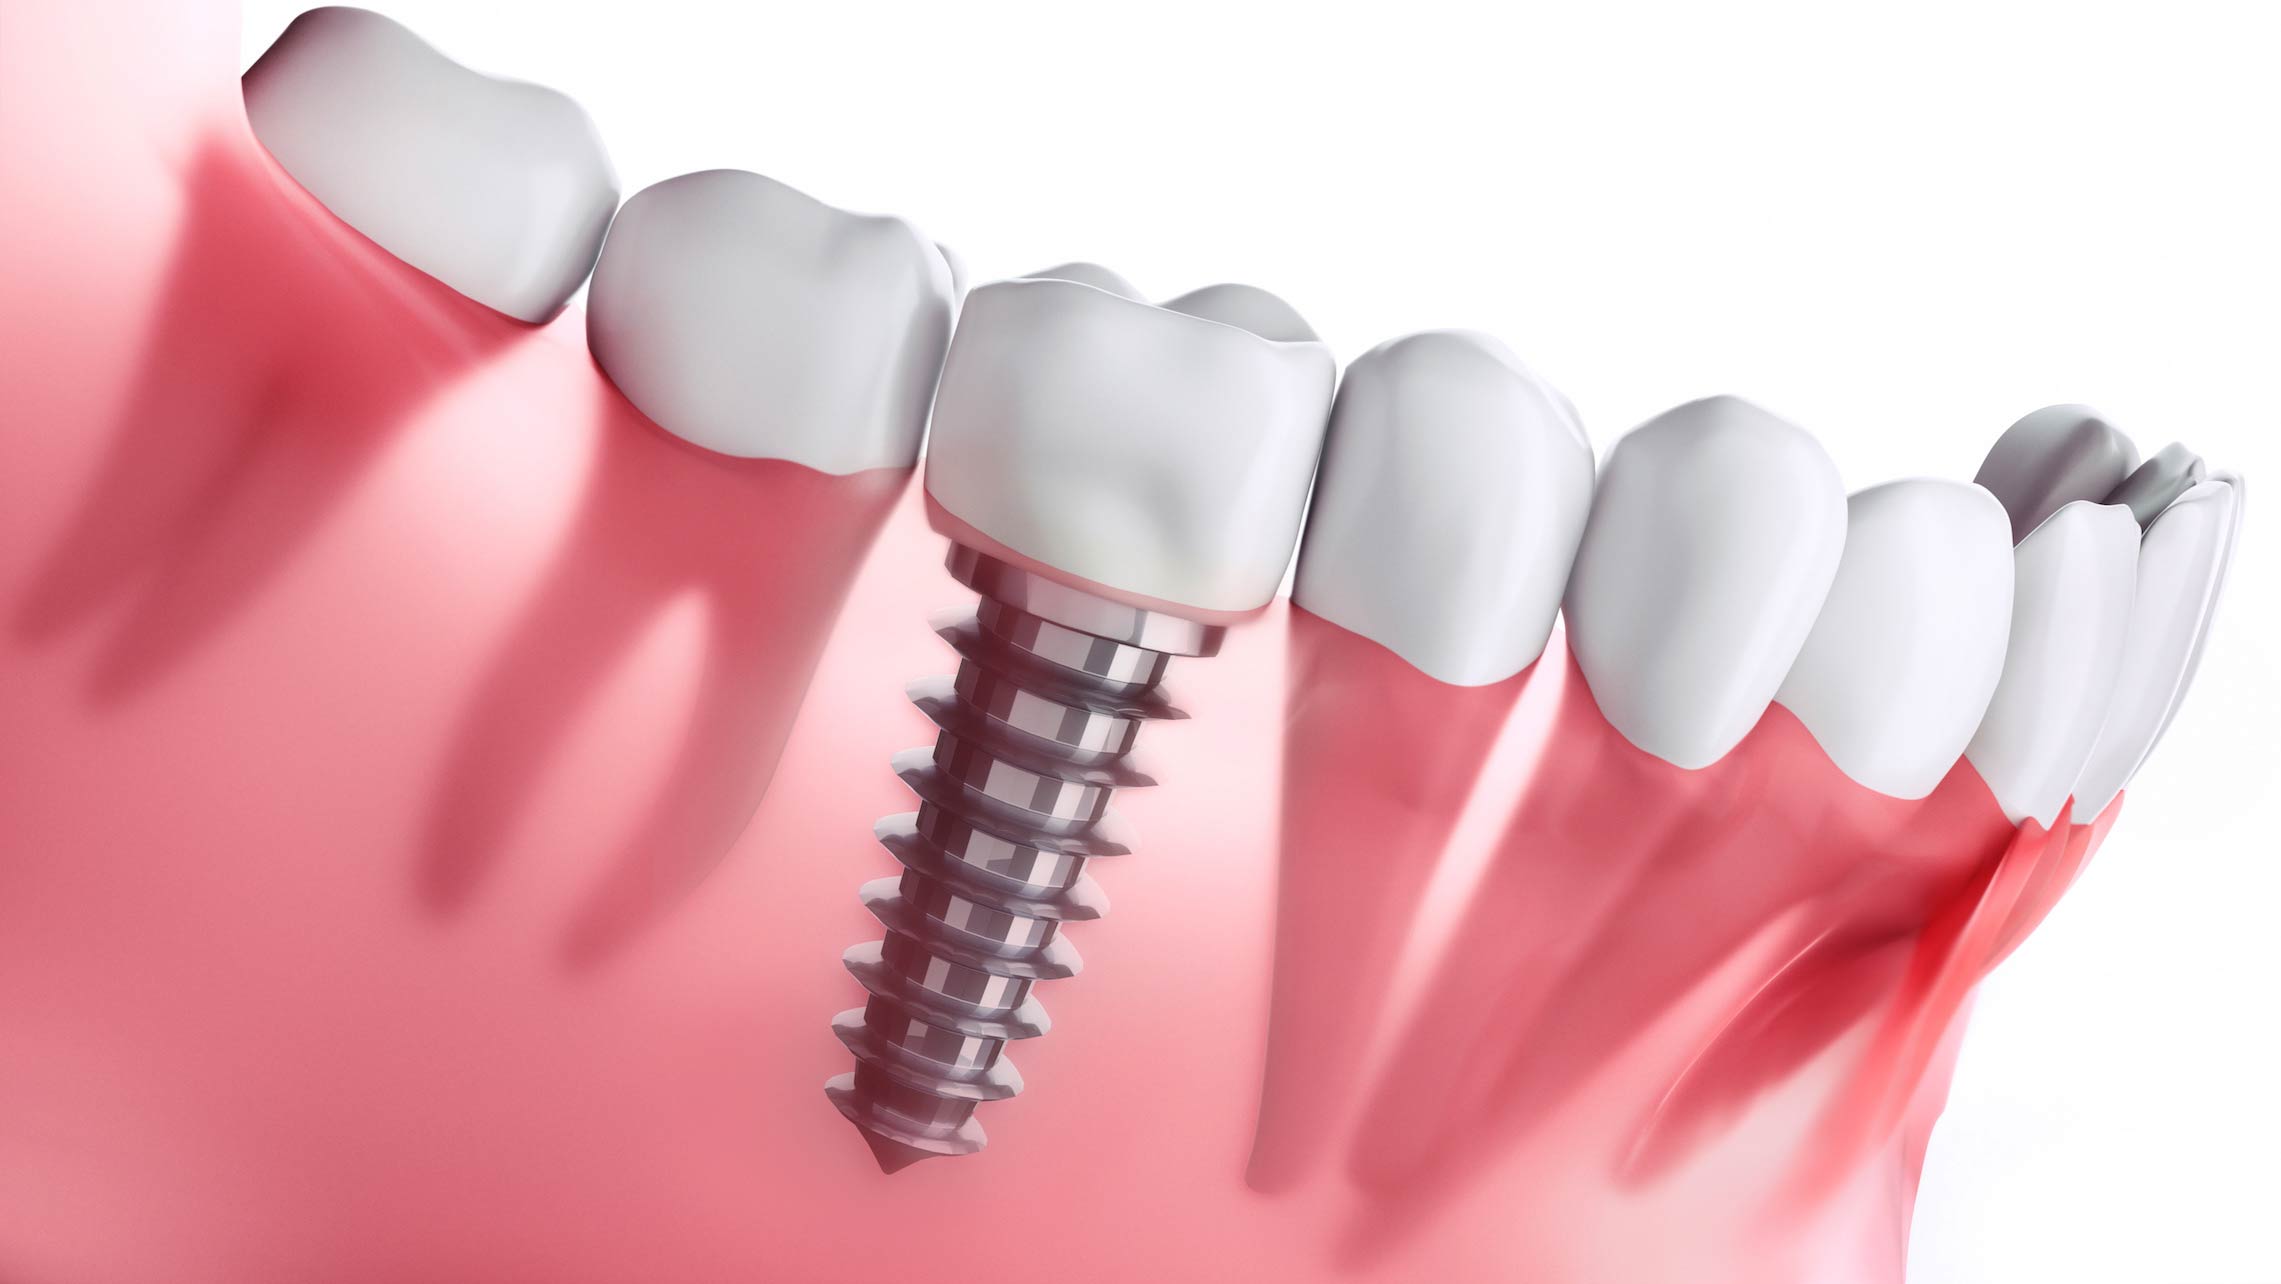 Implantoligia utile a sostituire un dente mancante